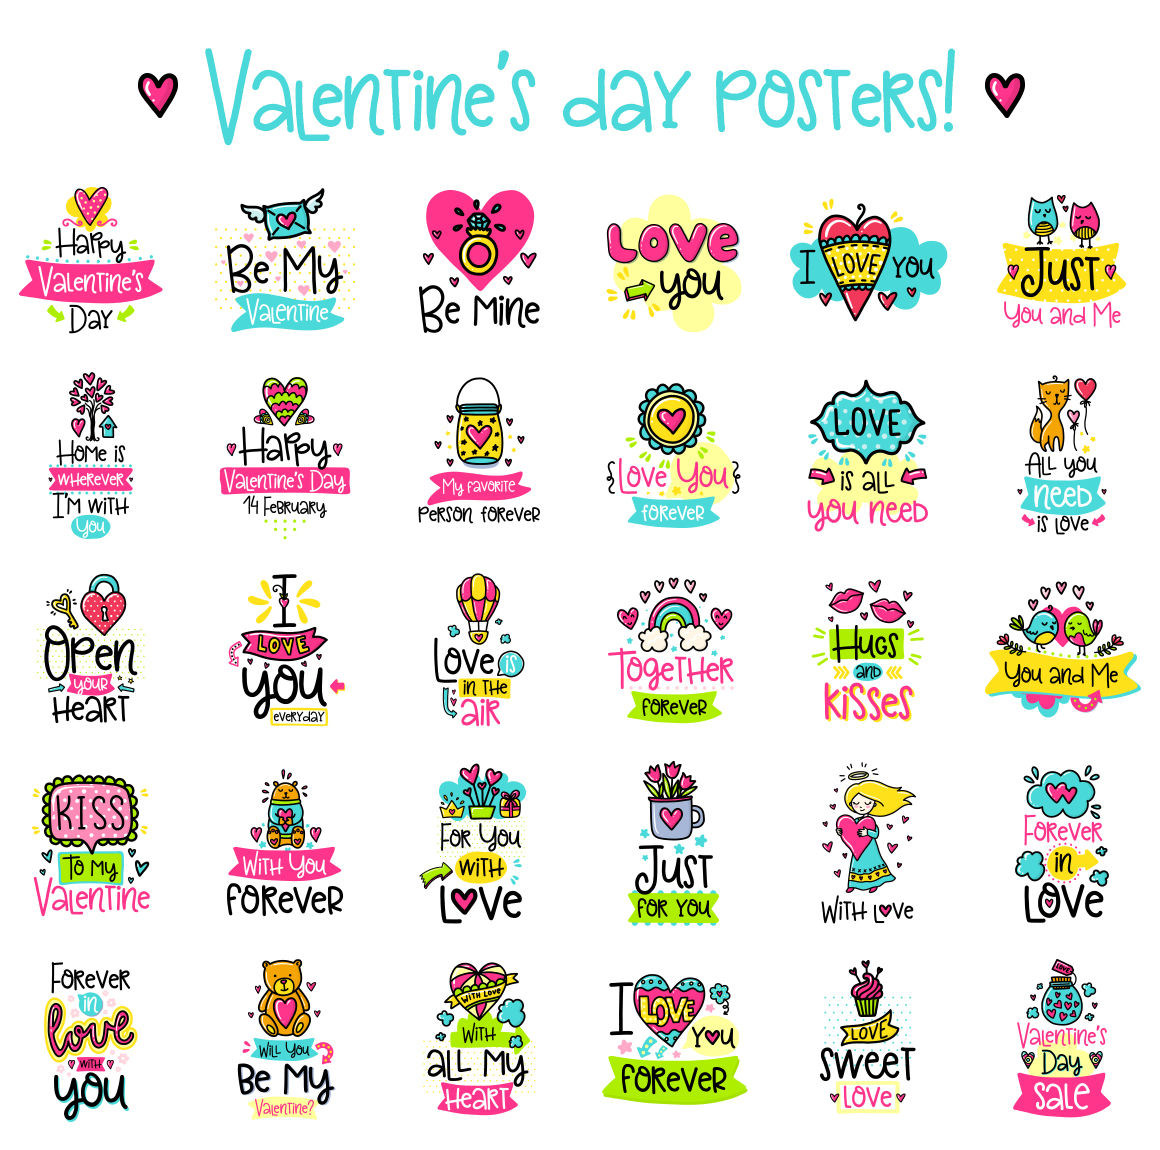 90 Valentine's Day Cards - Love Set By Qilli Design ...